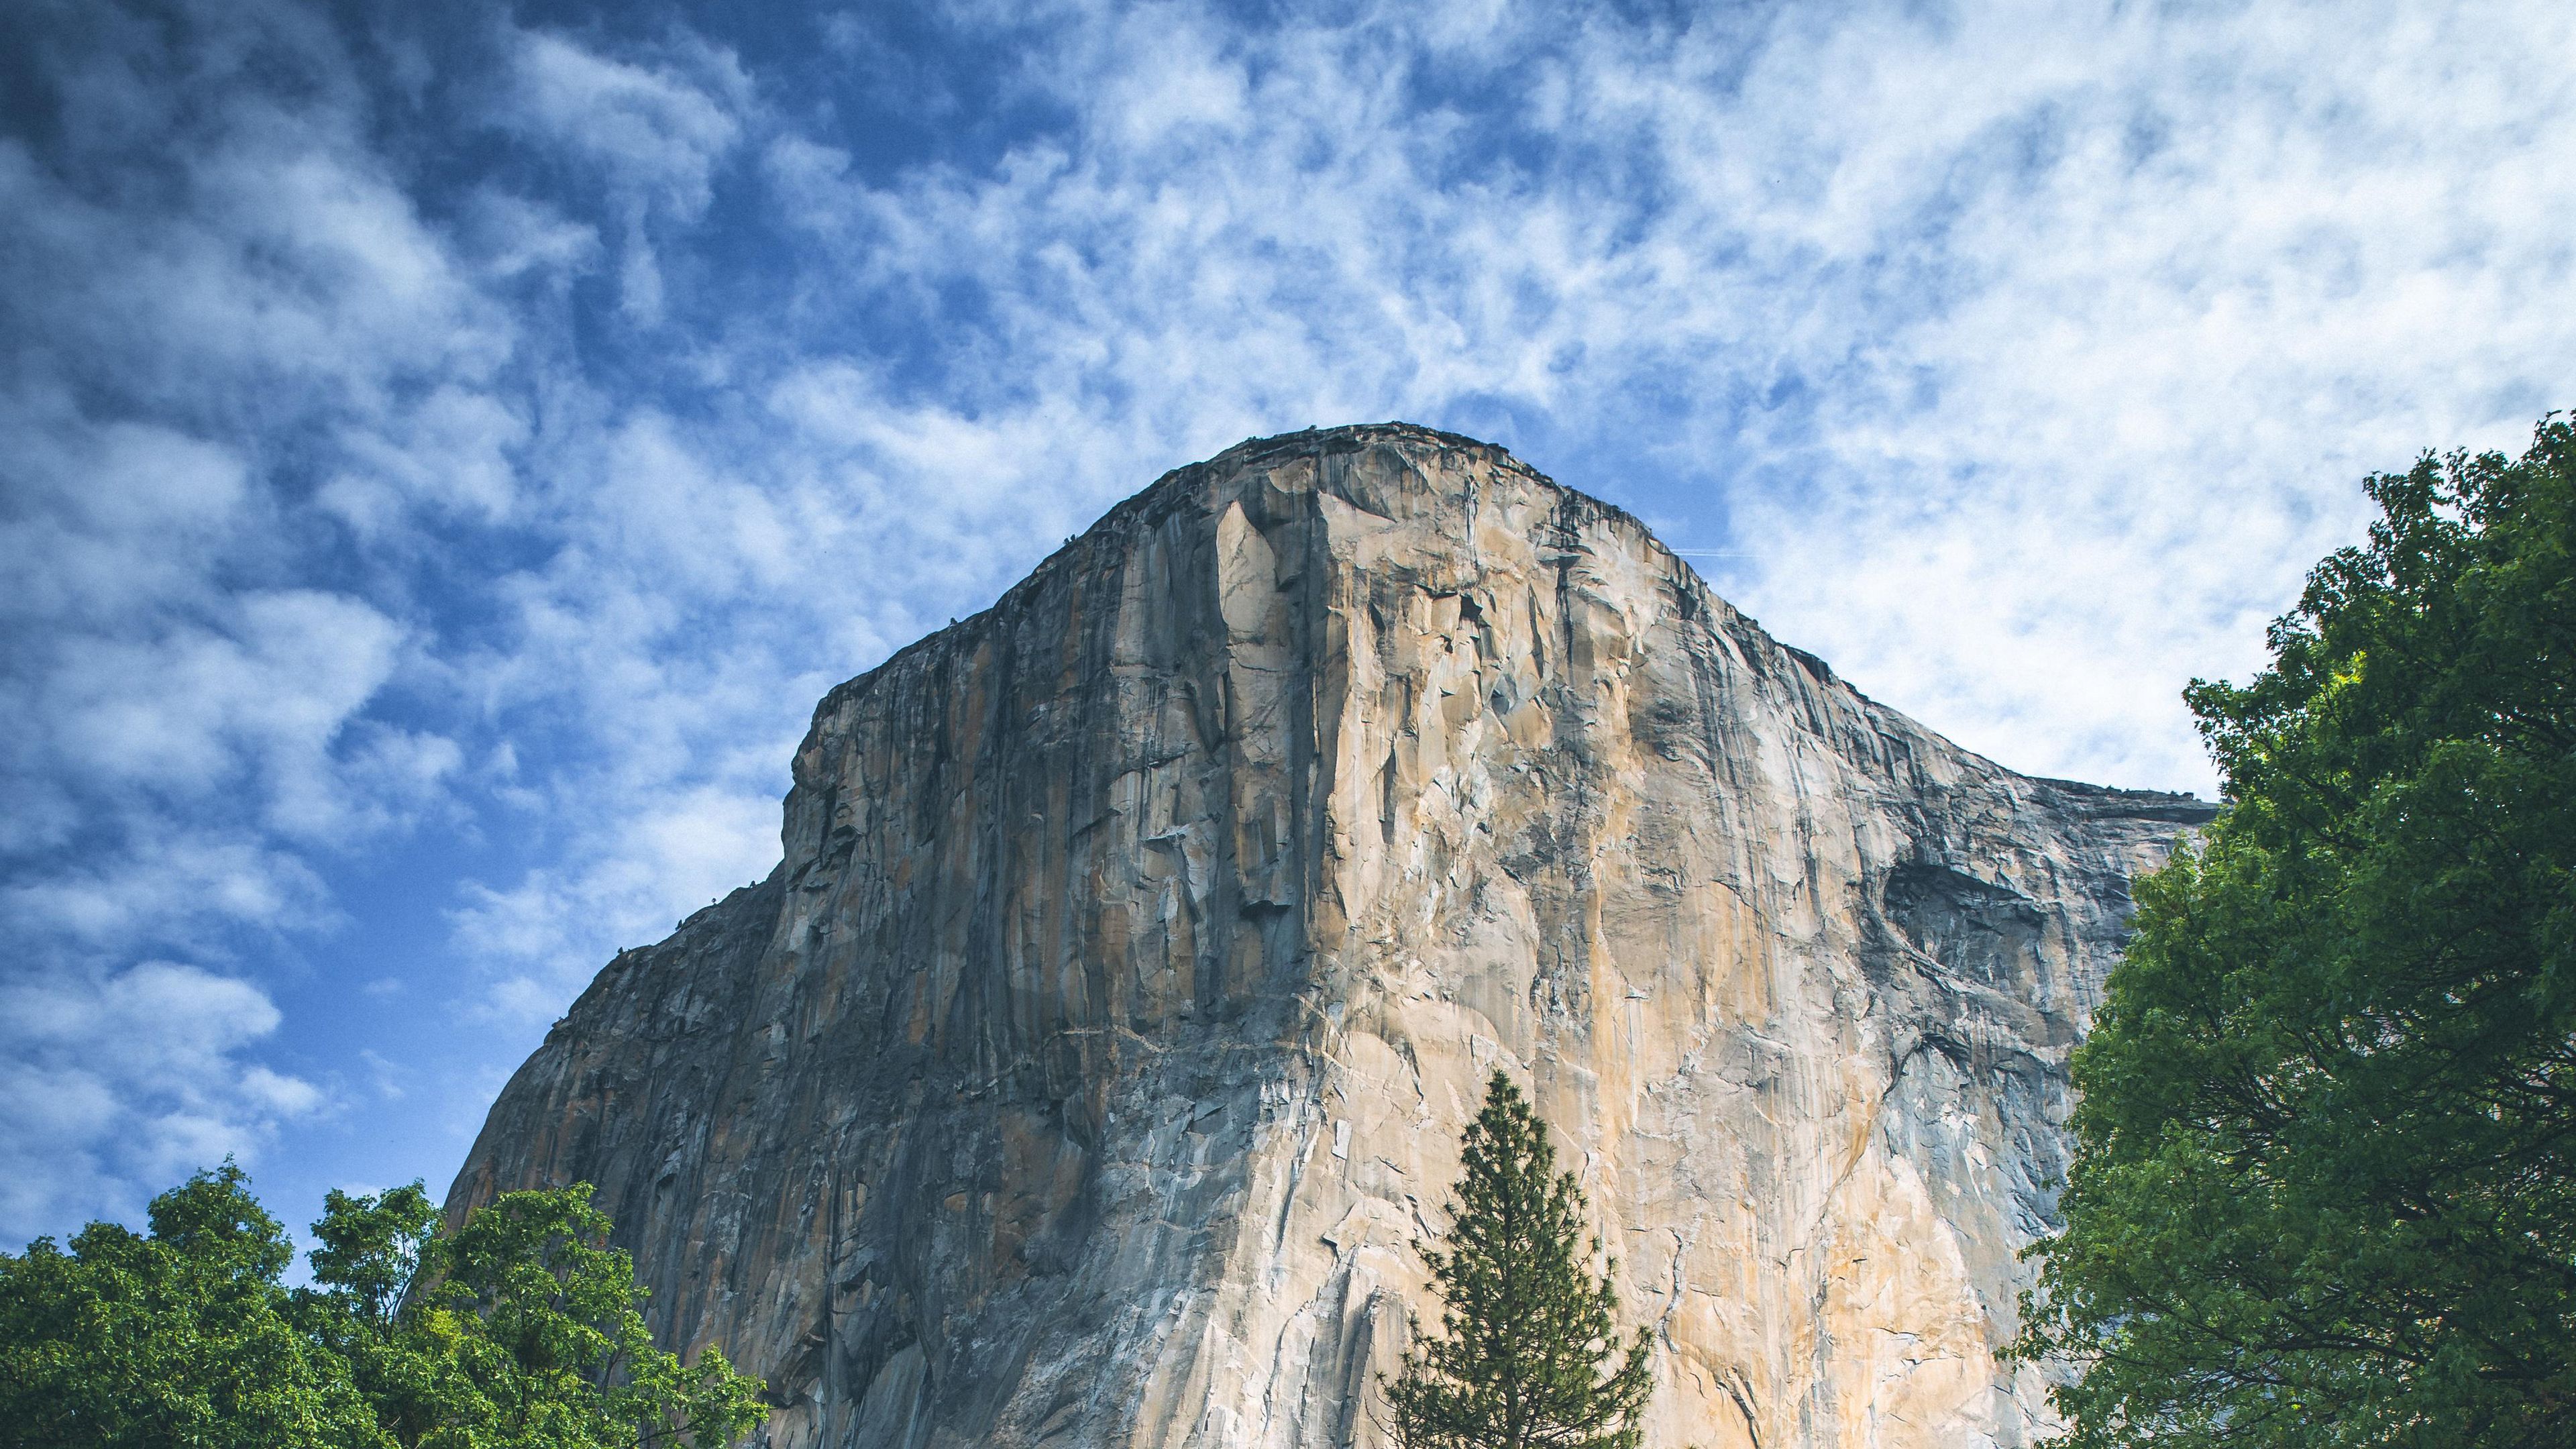 El Capitan And Half Dome Granite Cliffs In Yosemite National Park  California USA : Wallpapers13.com